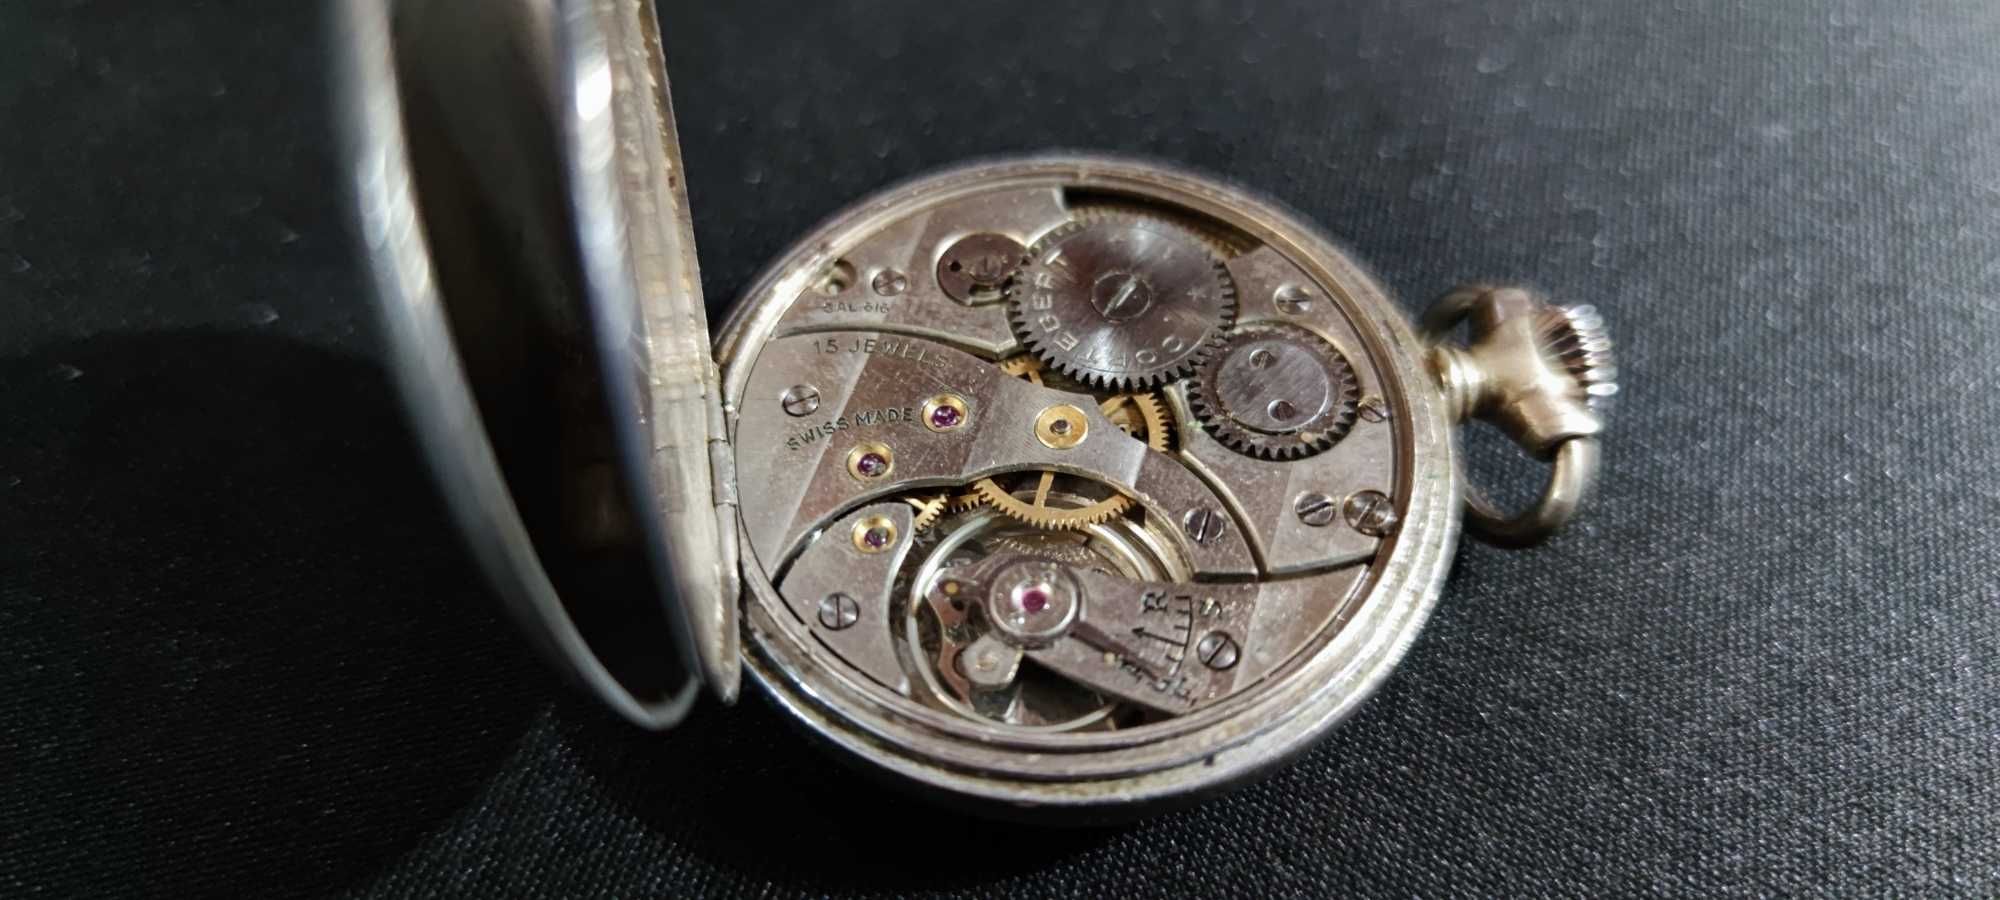 Relógio de bolso Cortébert Speciale pocketwatch